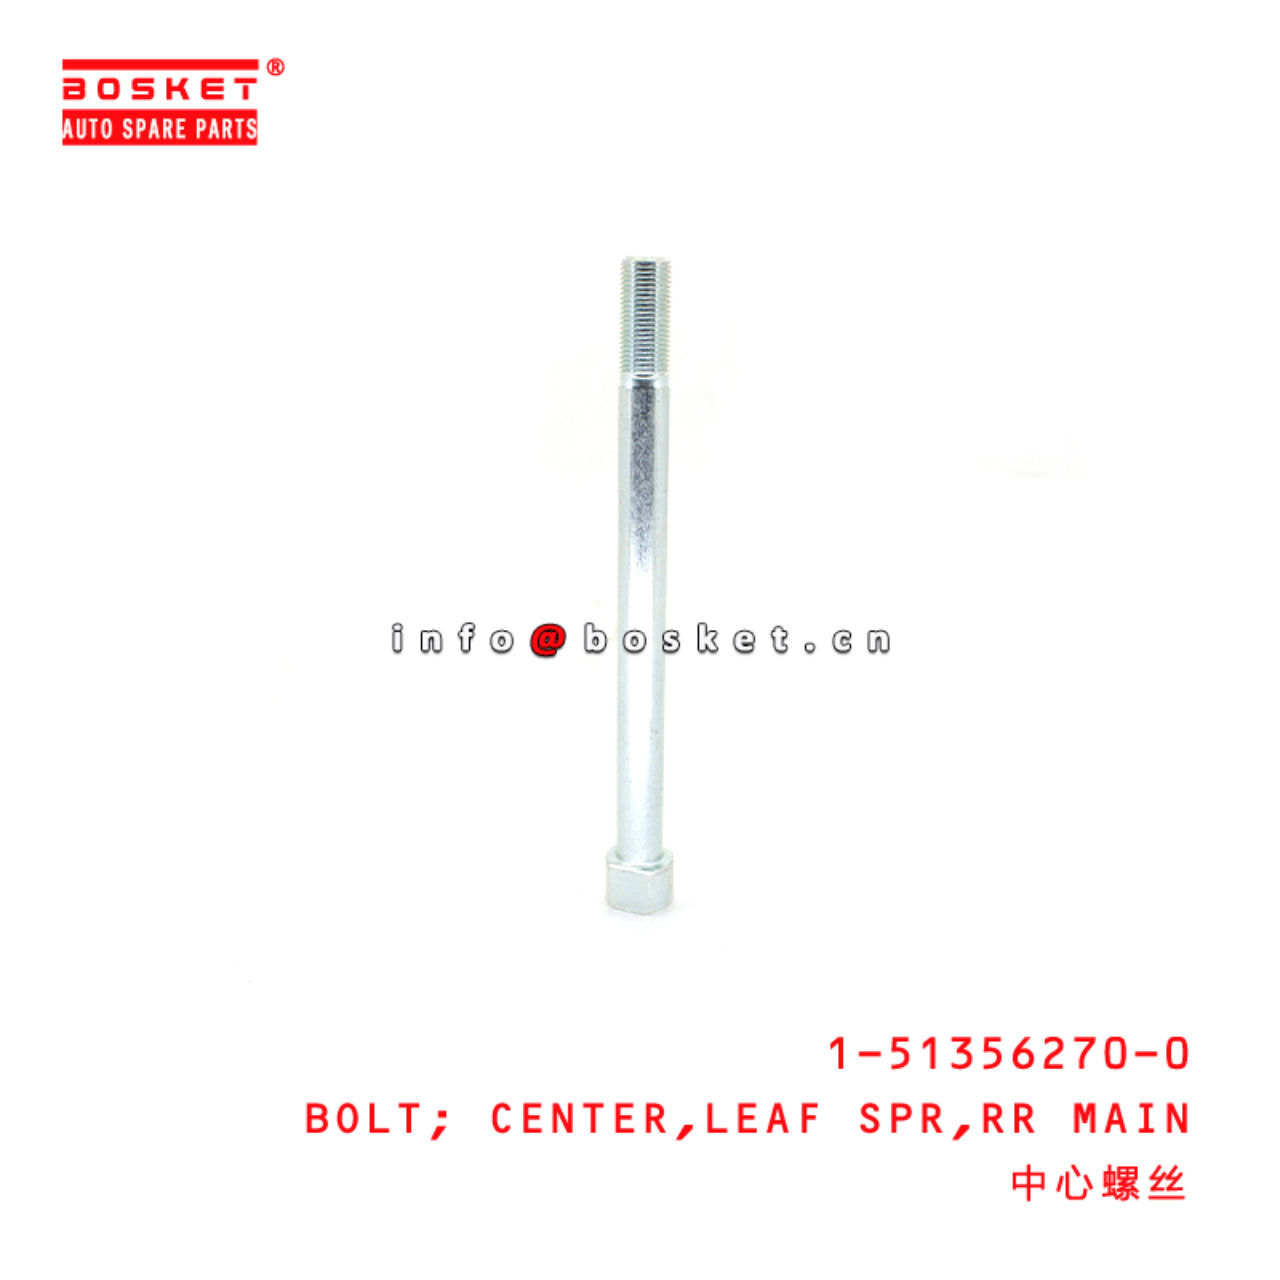 1-51356270-0 Rear Main Leaf Spring Center Bolt Suitable for ISUZU 1513562700